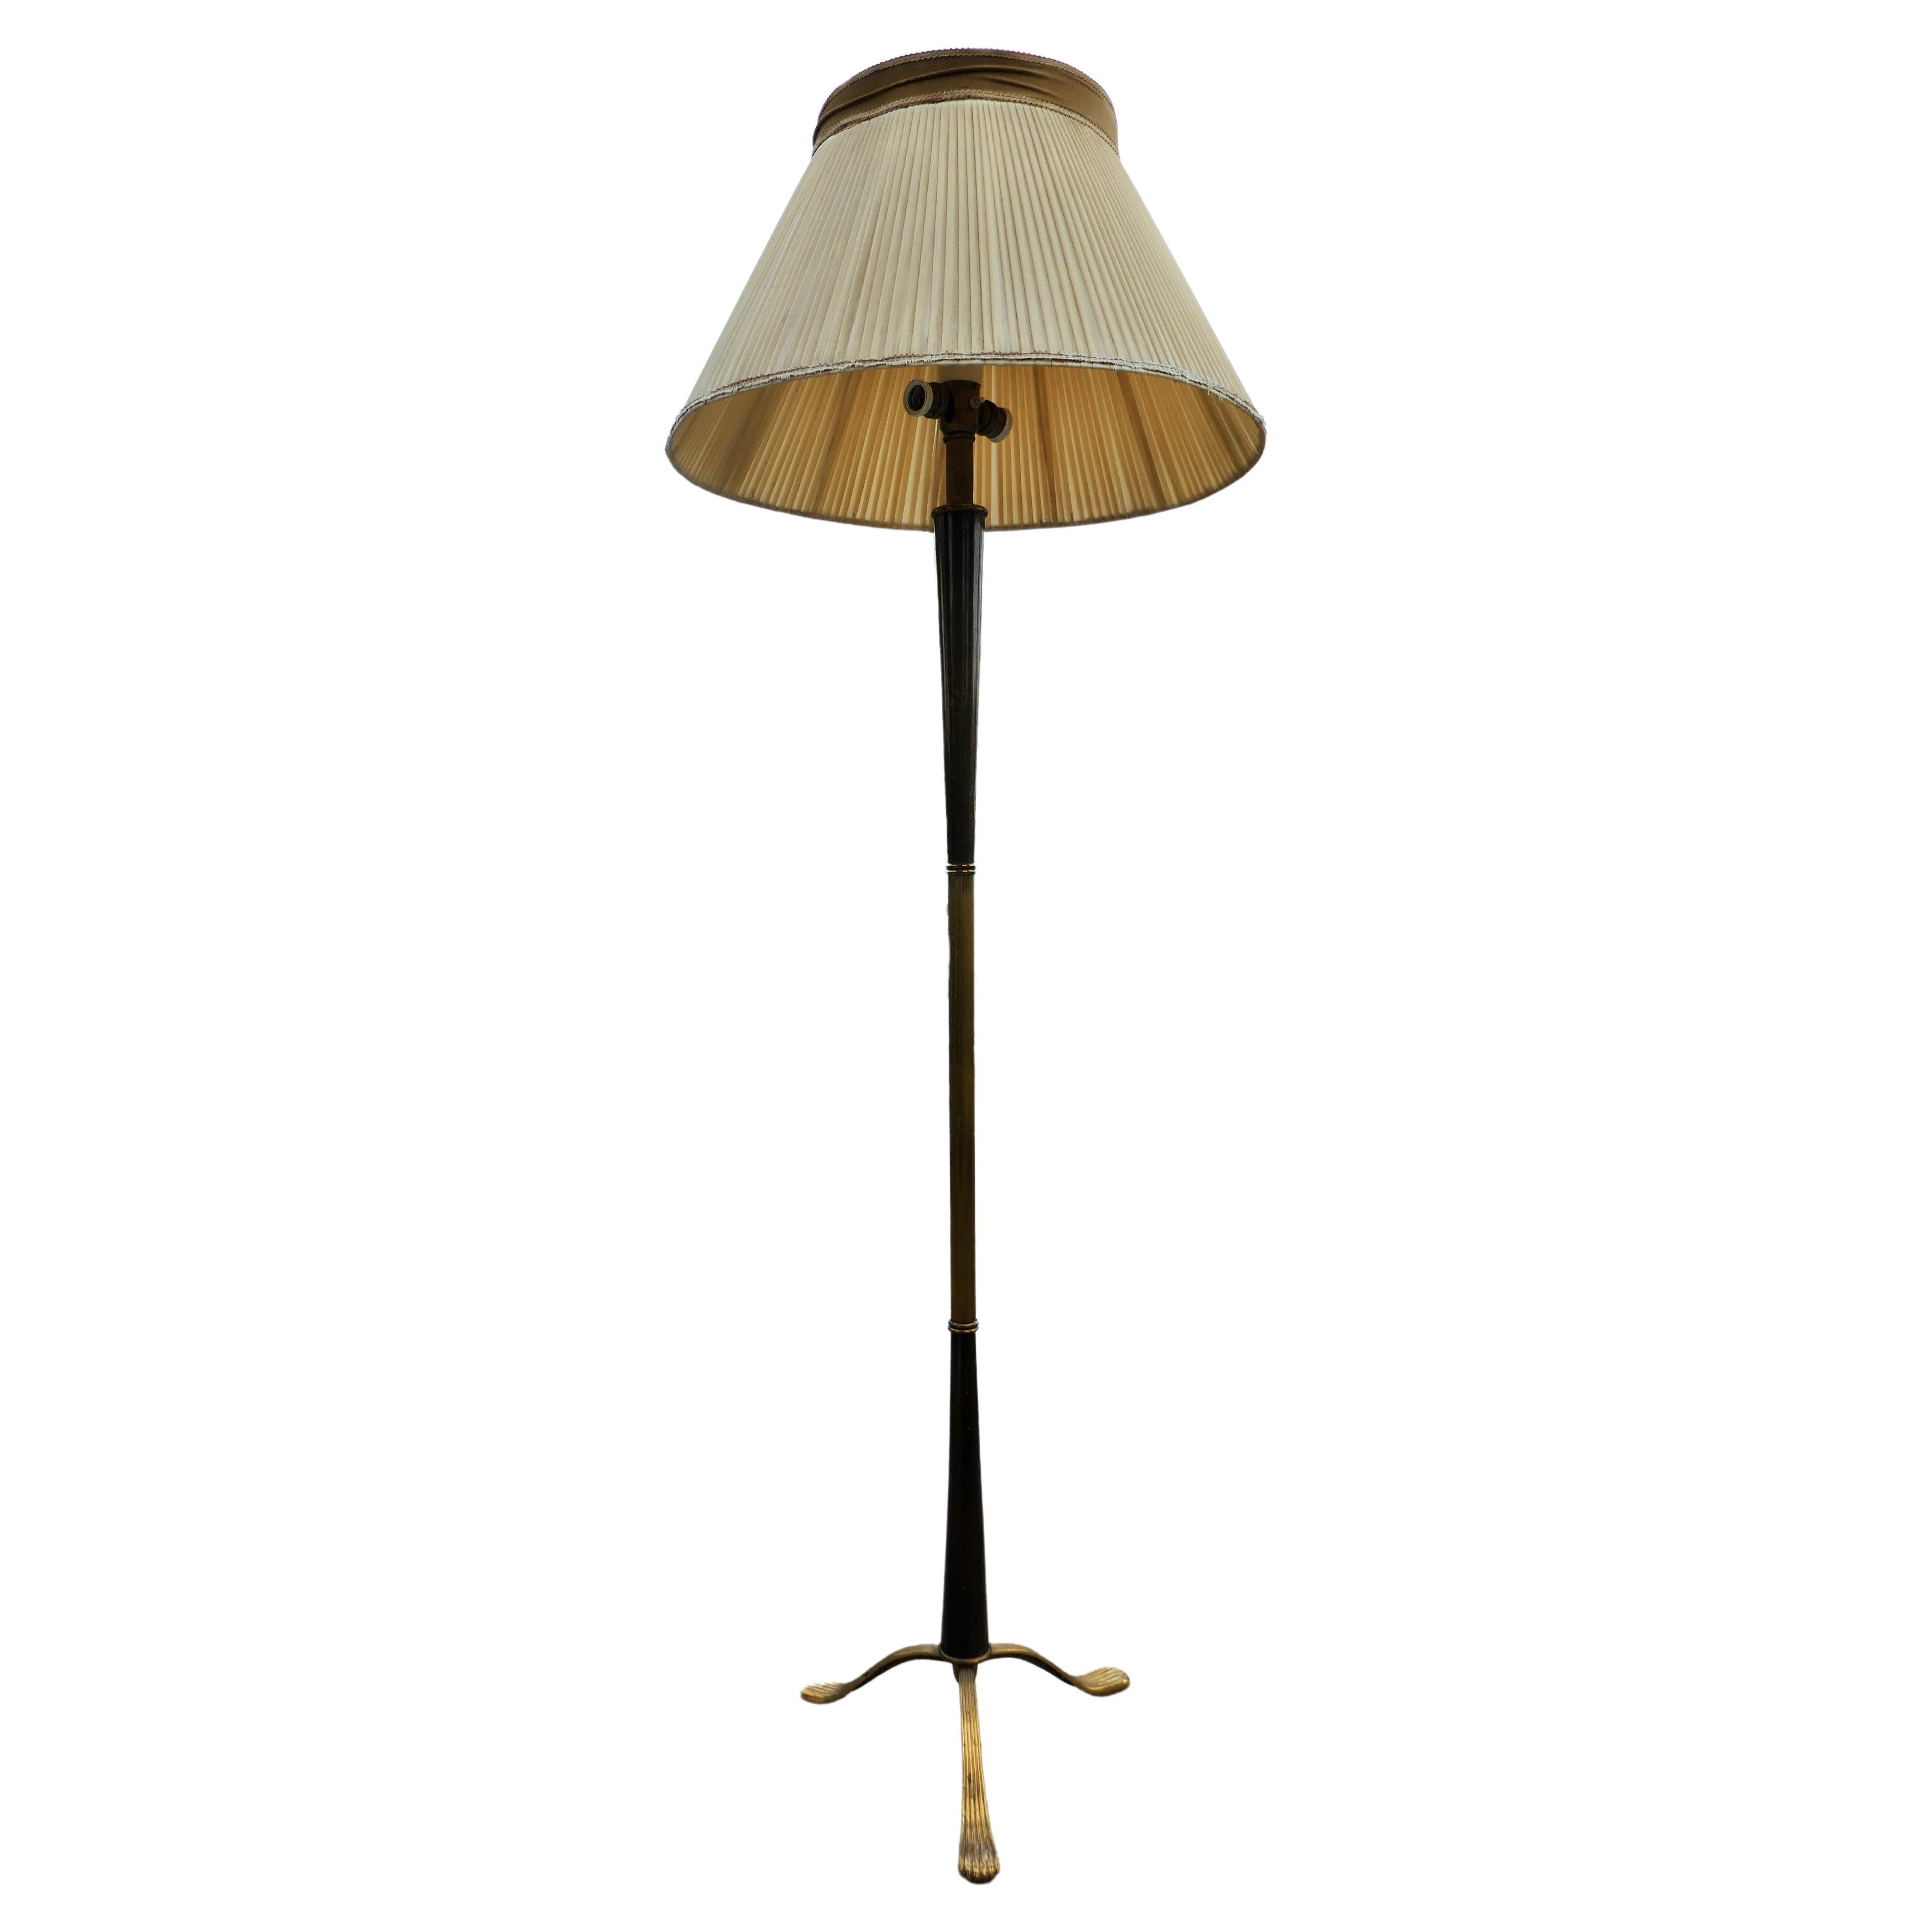 Floor lamp attributed to Osvaldo Borsani.
Dual ignition
Good Condition
Thank you